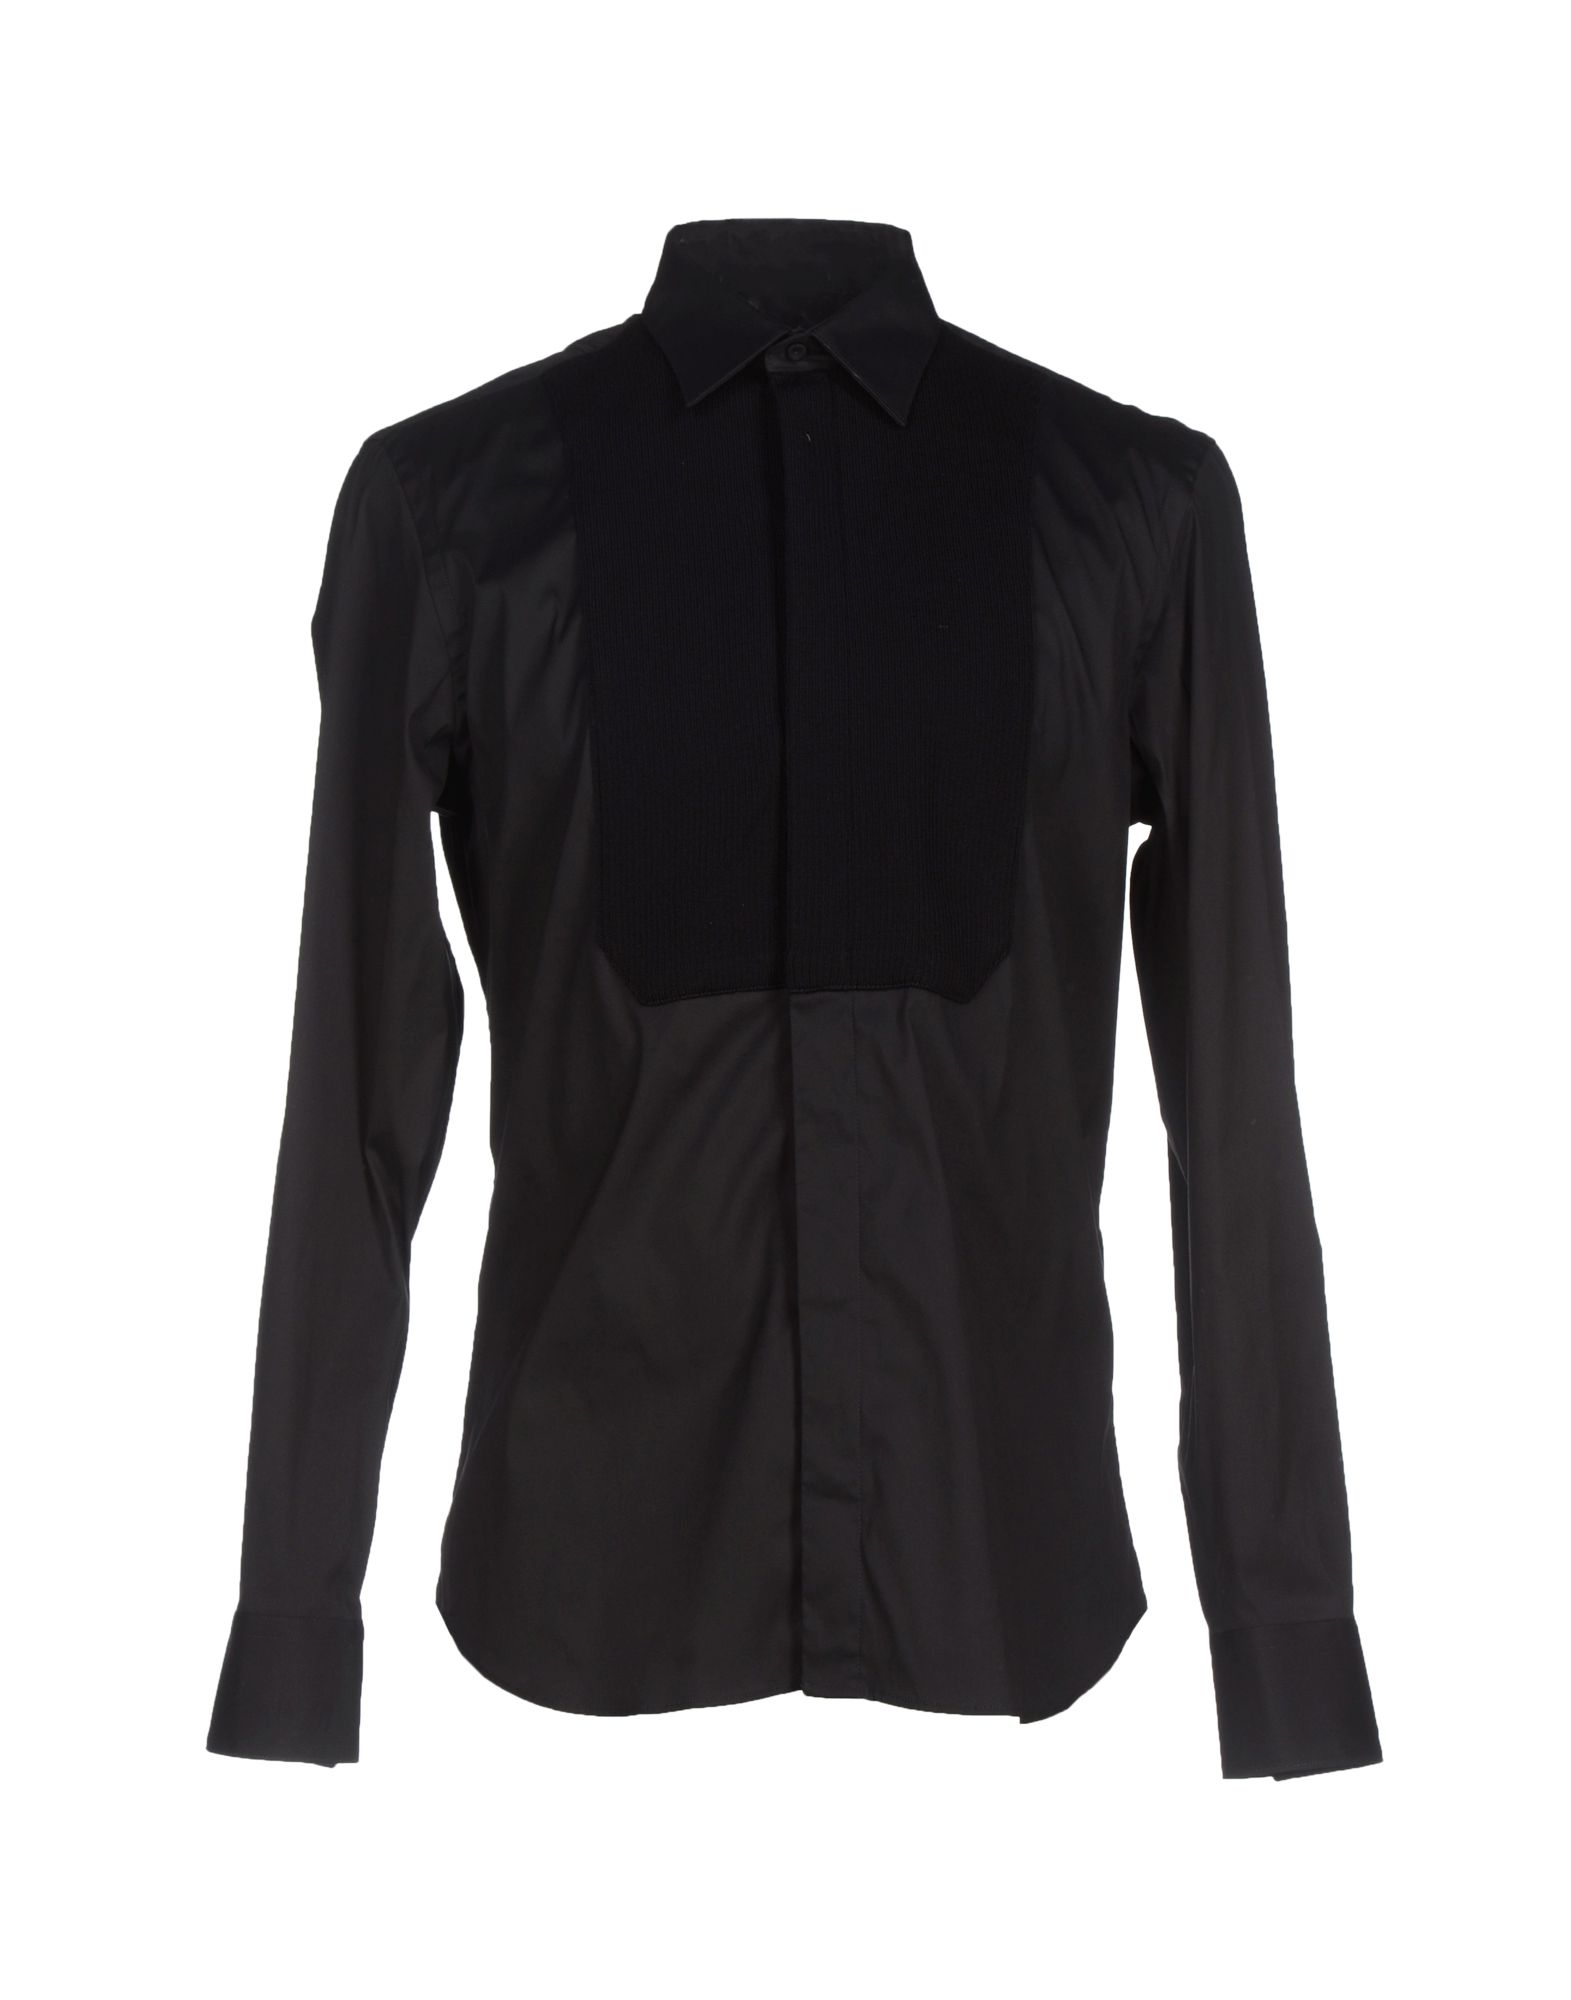 Lyst - Emporio Armani Shirt in Black for Men